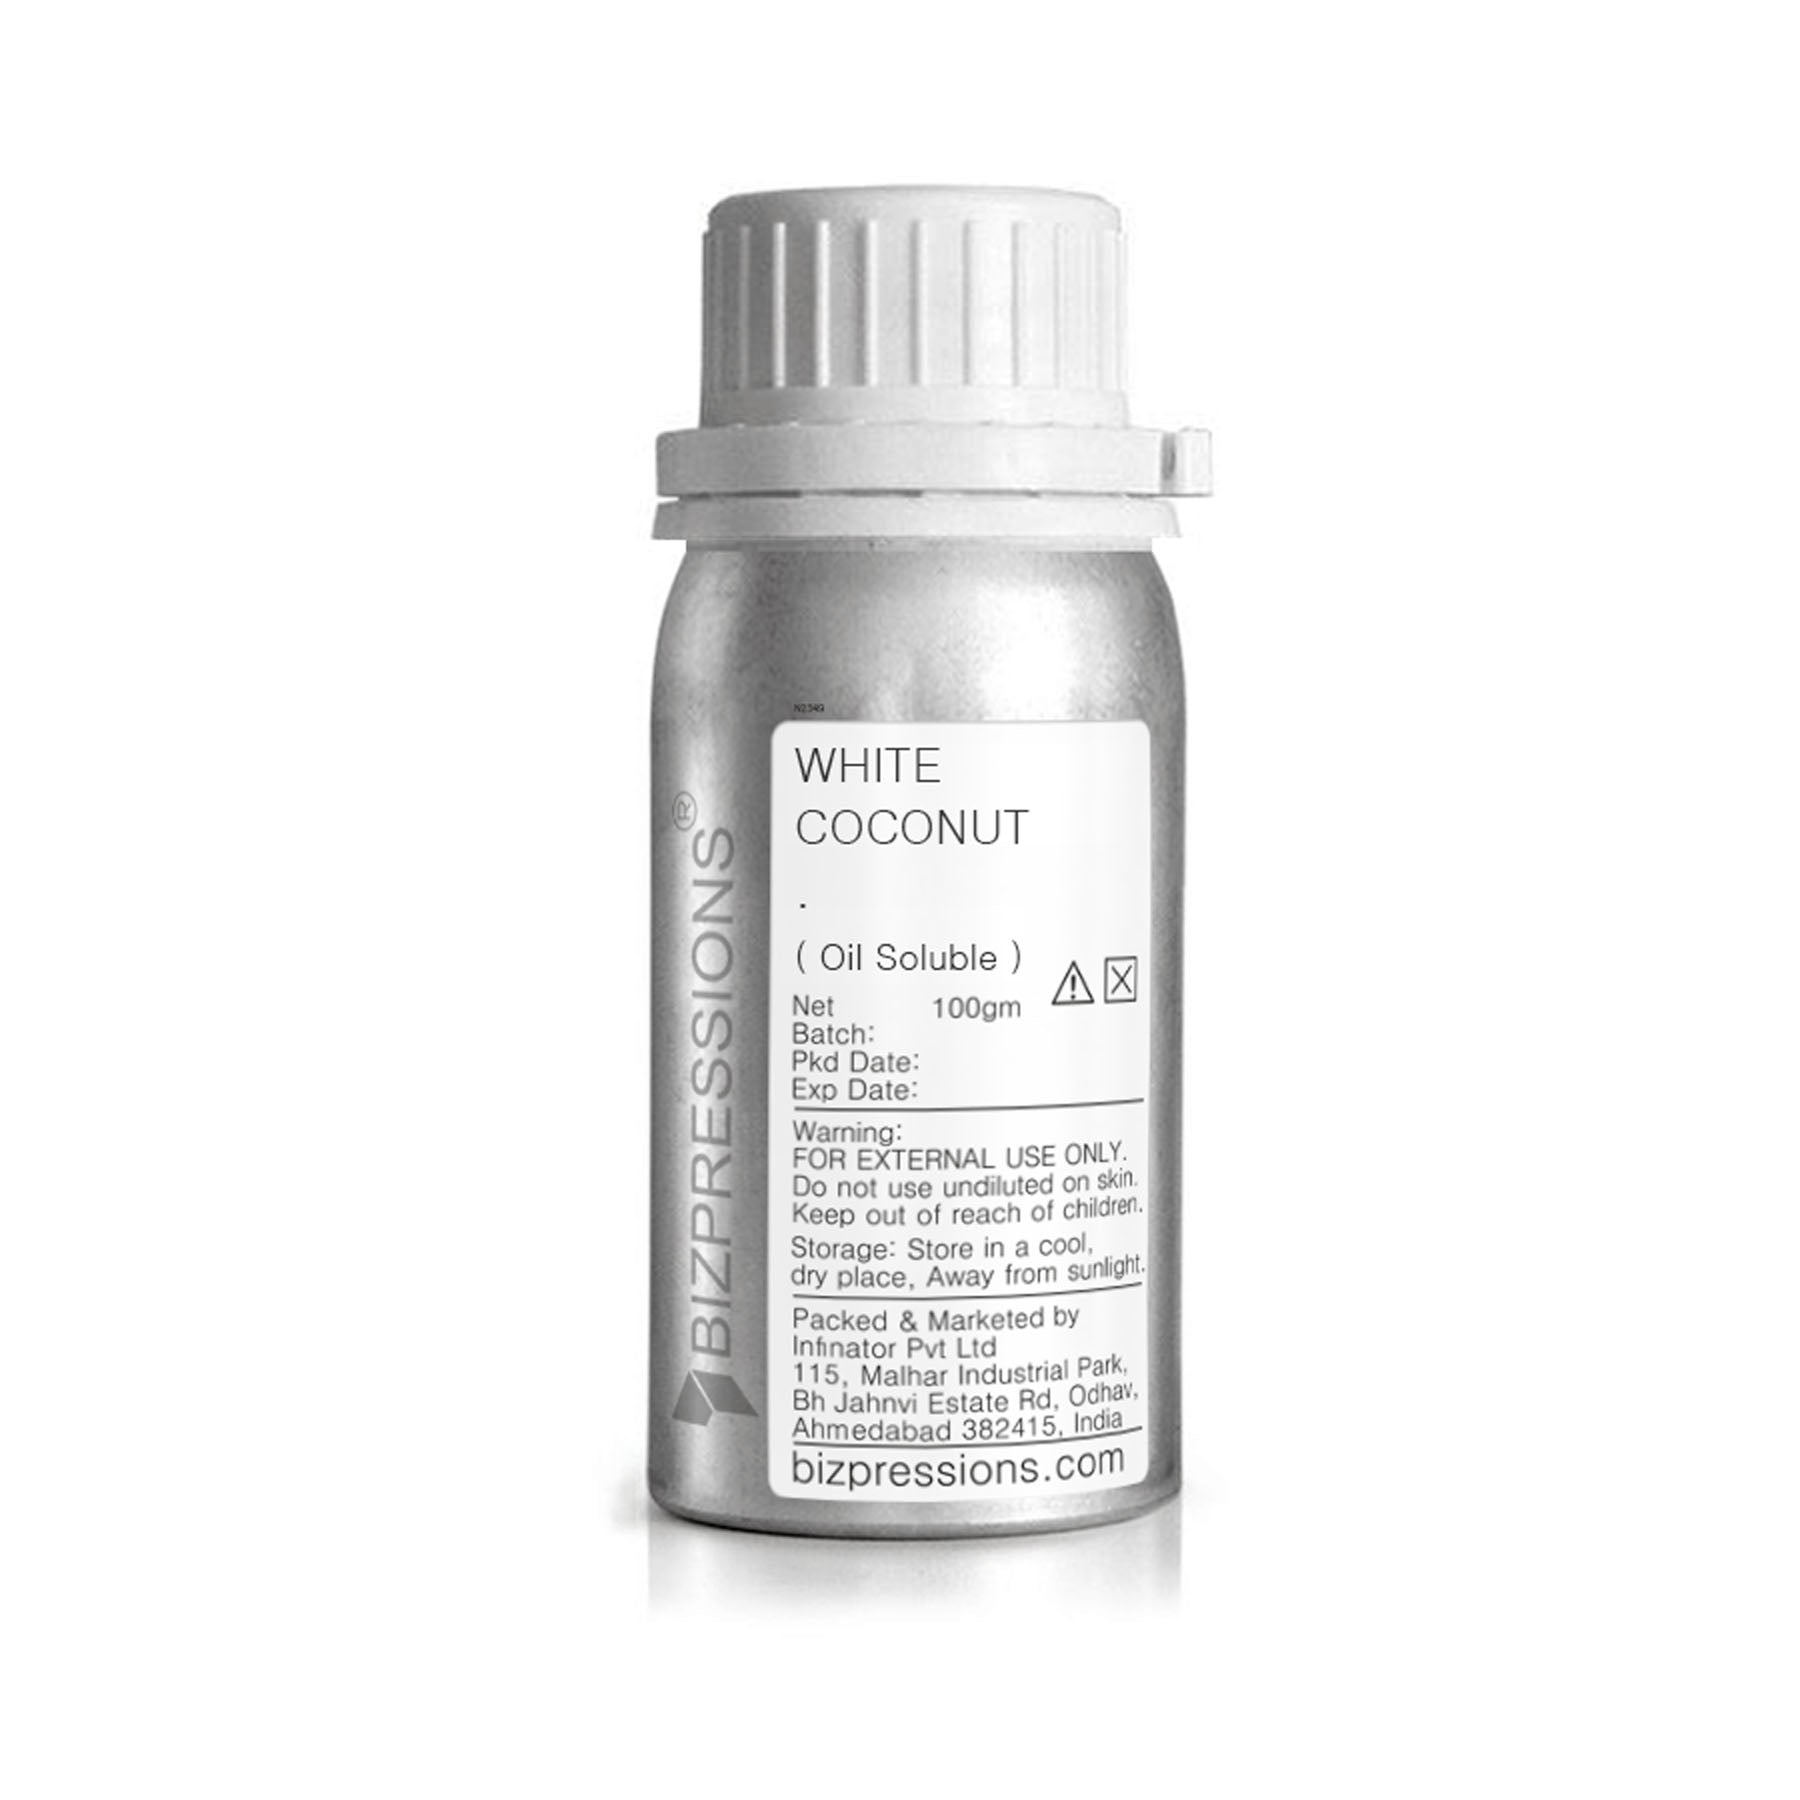 WHITE COCONUT - Fragrance ( Oil Soluble ) - 100 gm